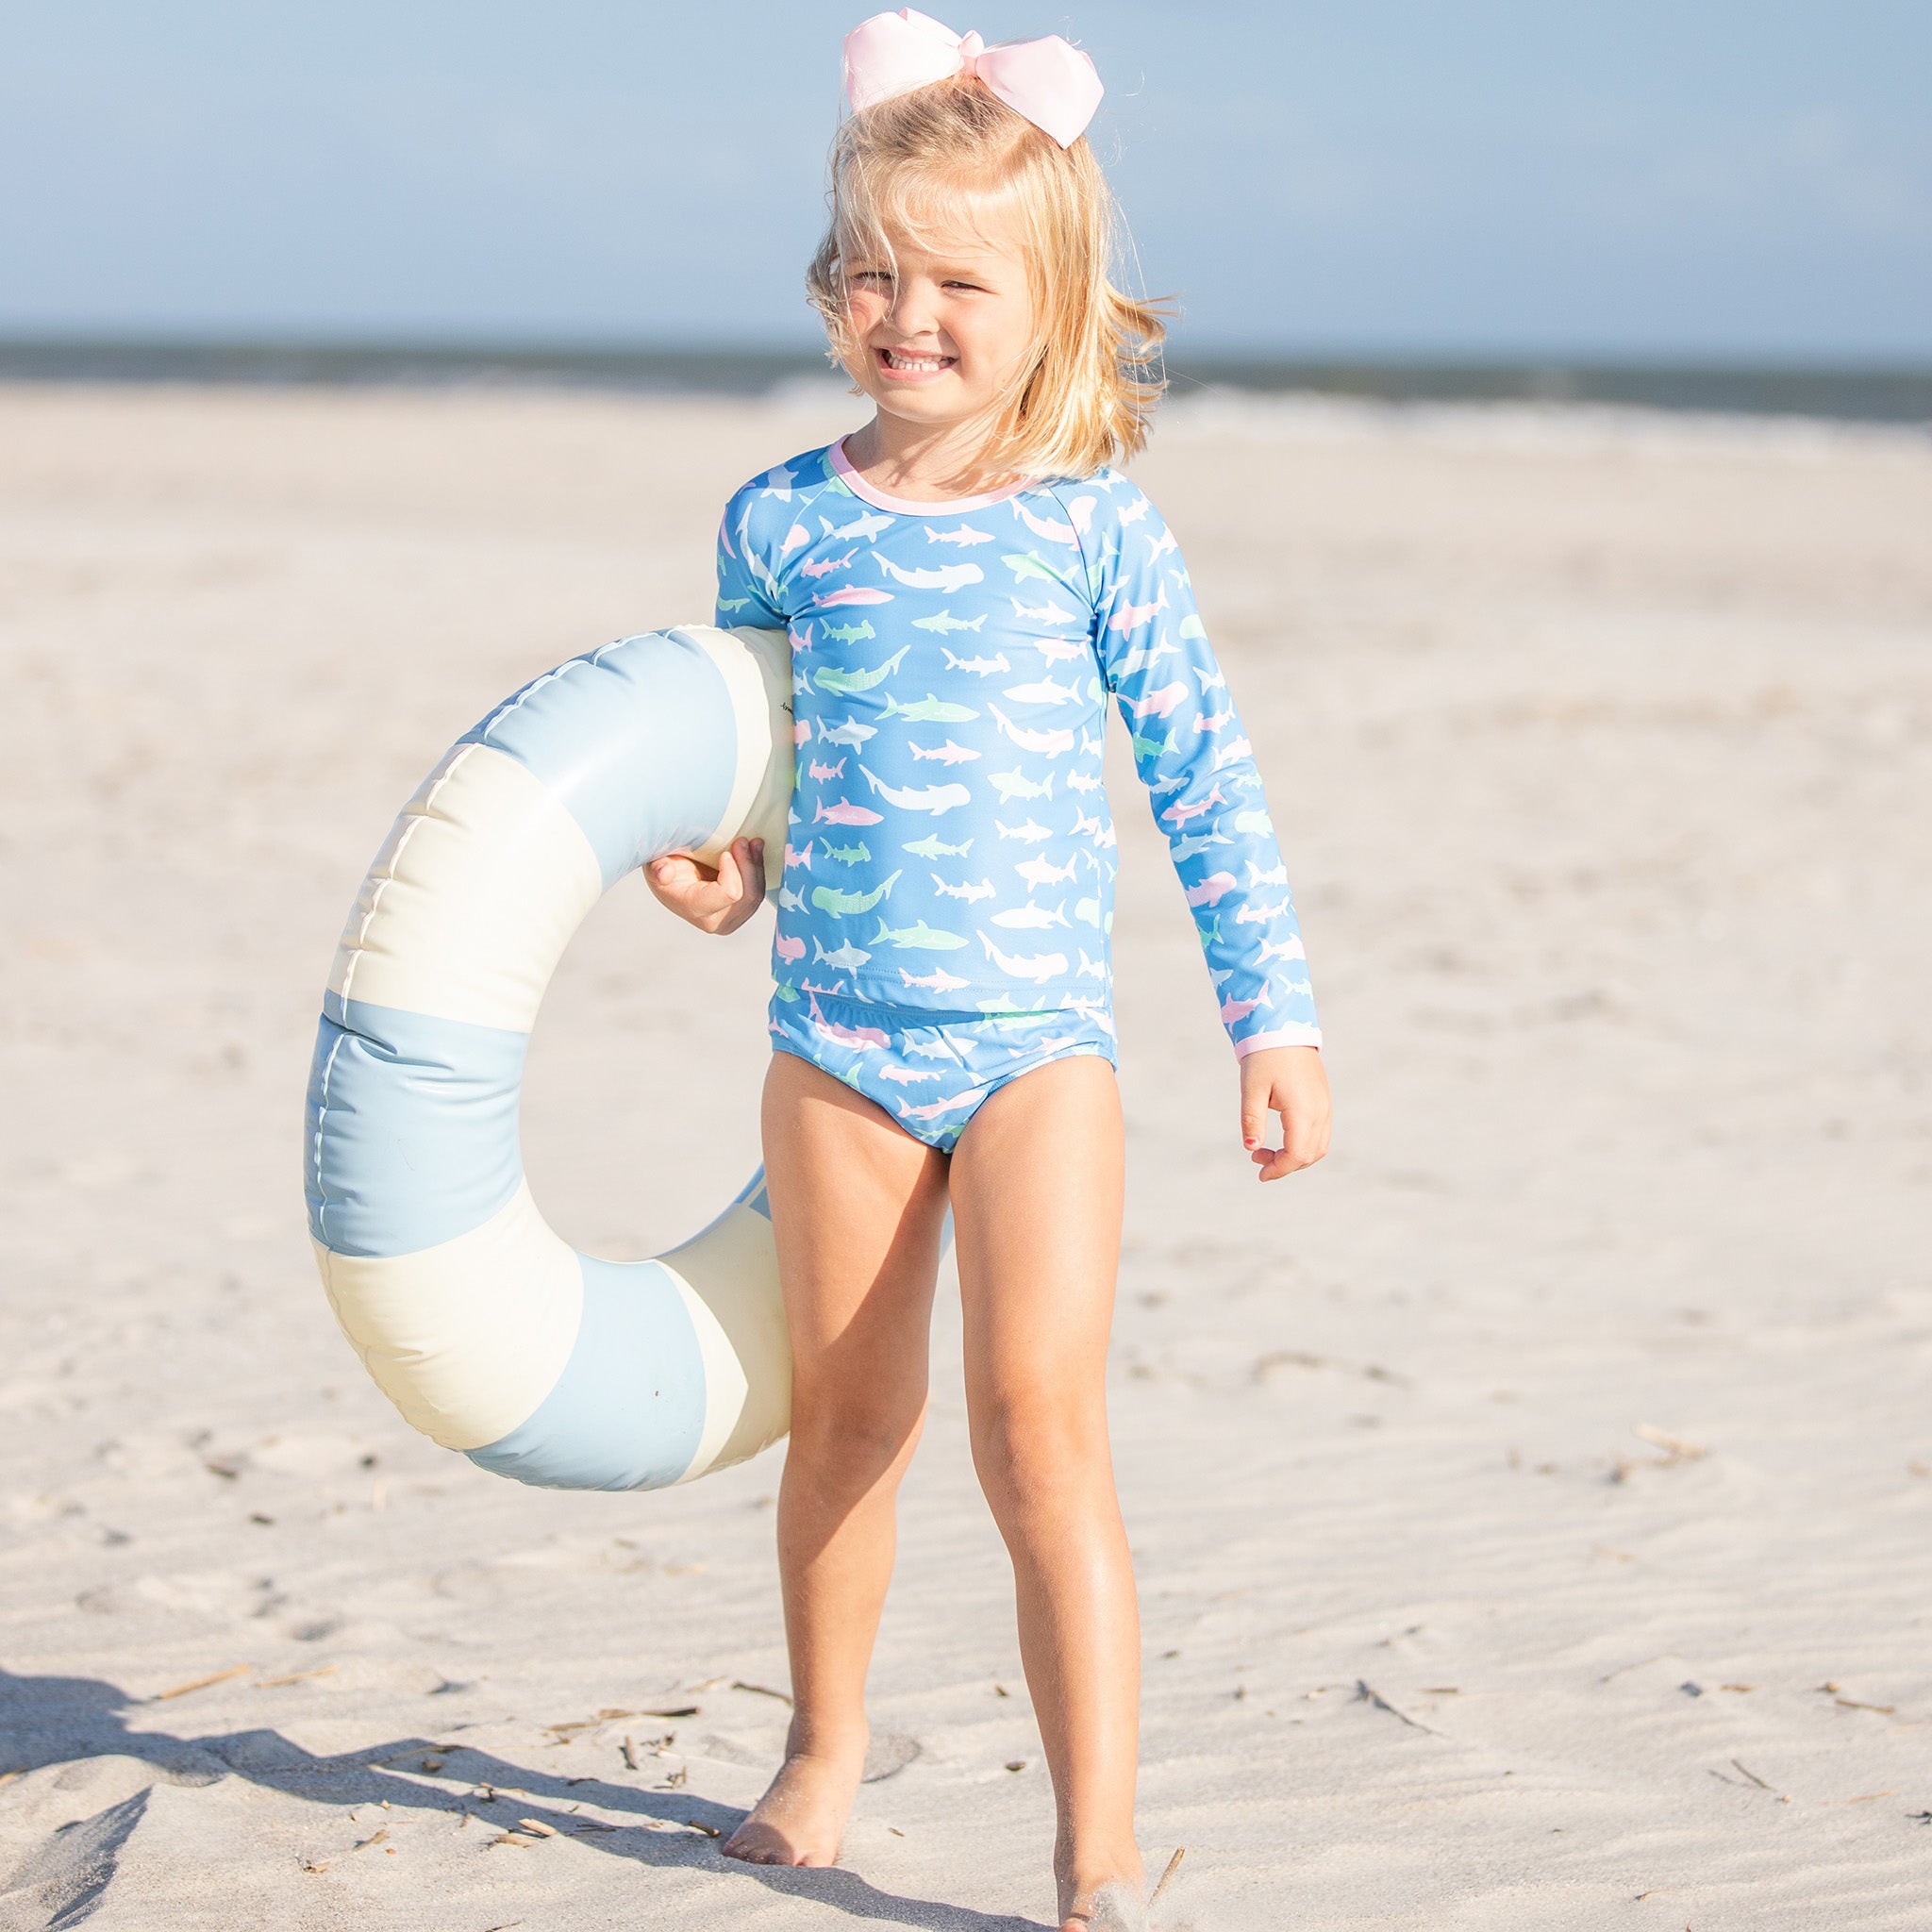 Thermal Swimsuit Kids, Babies & Kids, Babies & Kids Fashion on